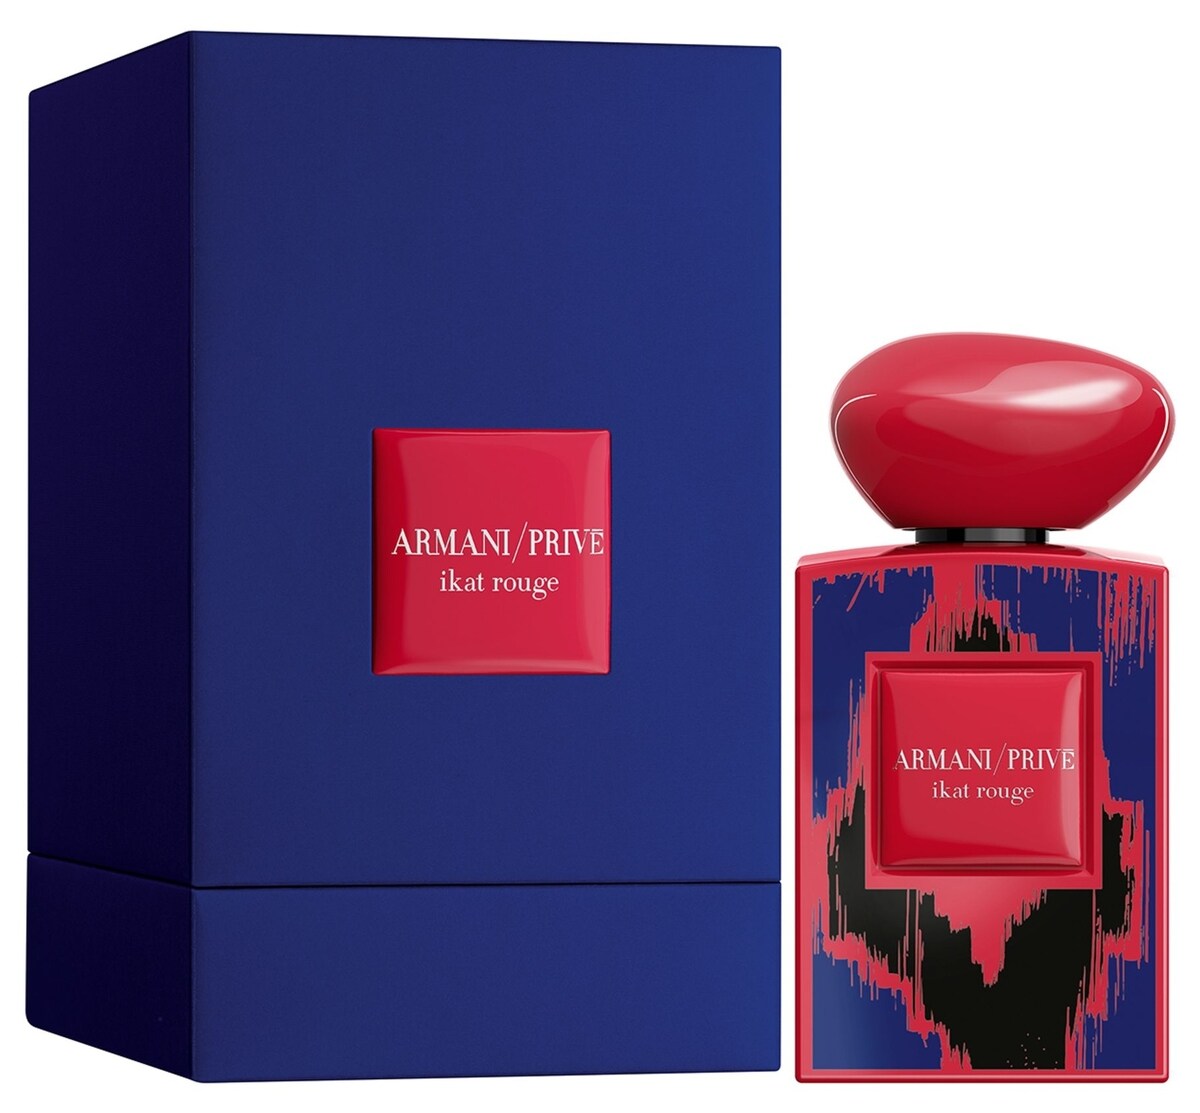 Armani Privé - Ikat Rouge by Giorgio Armani » Reviews & Perfume Facts